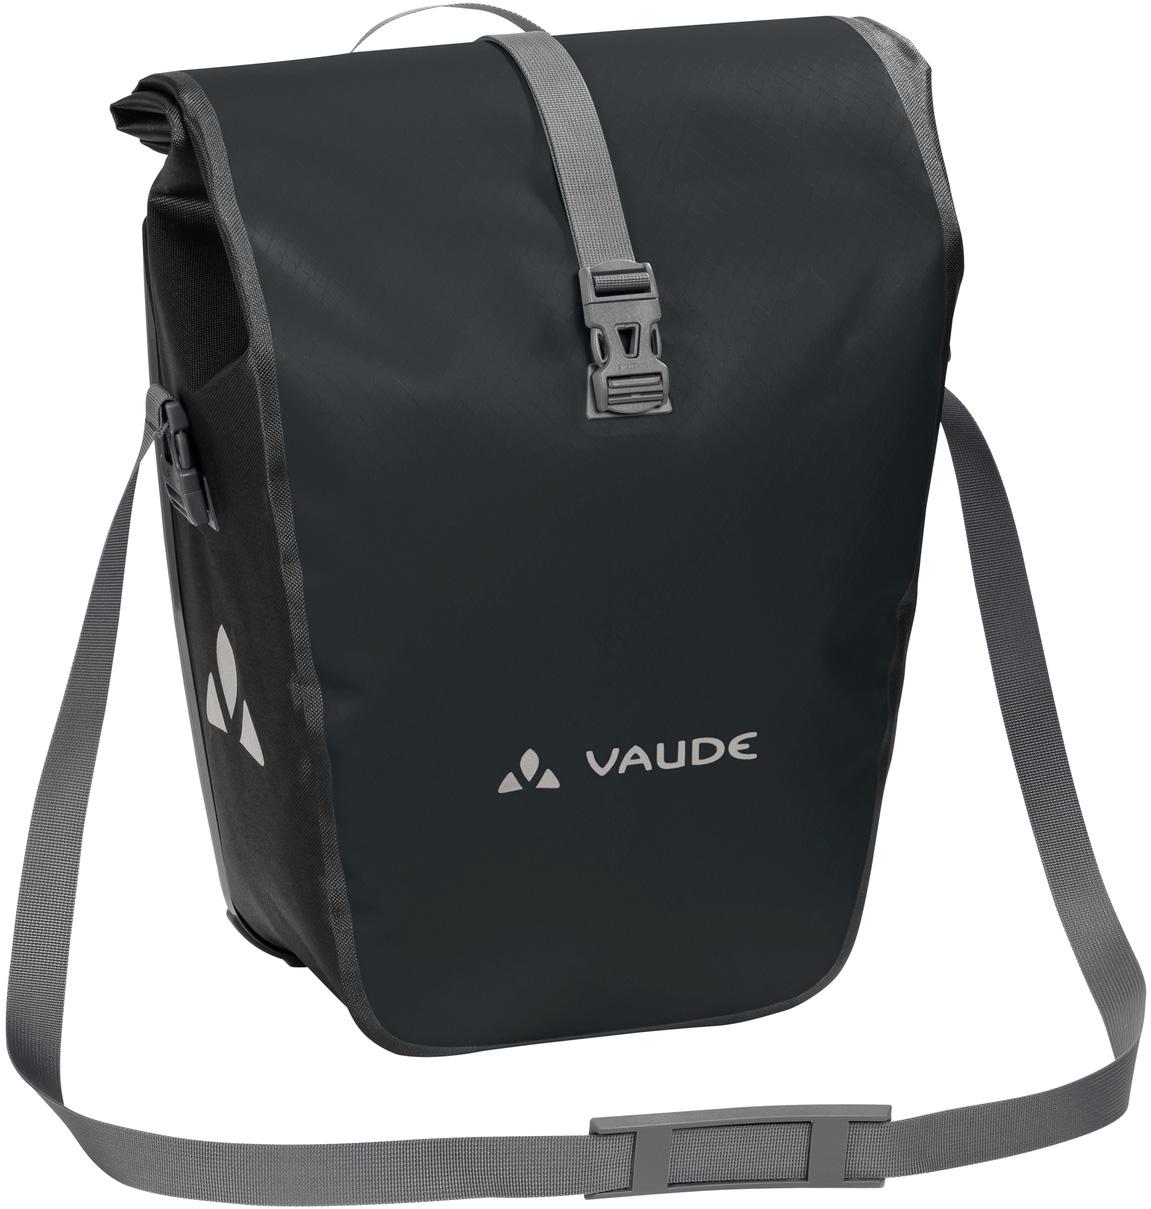 Vaude Aqua Rear Pannier Bags (pair) - Black